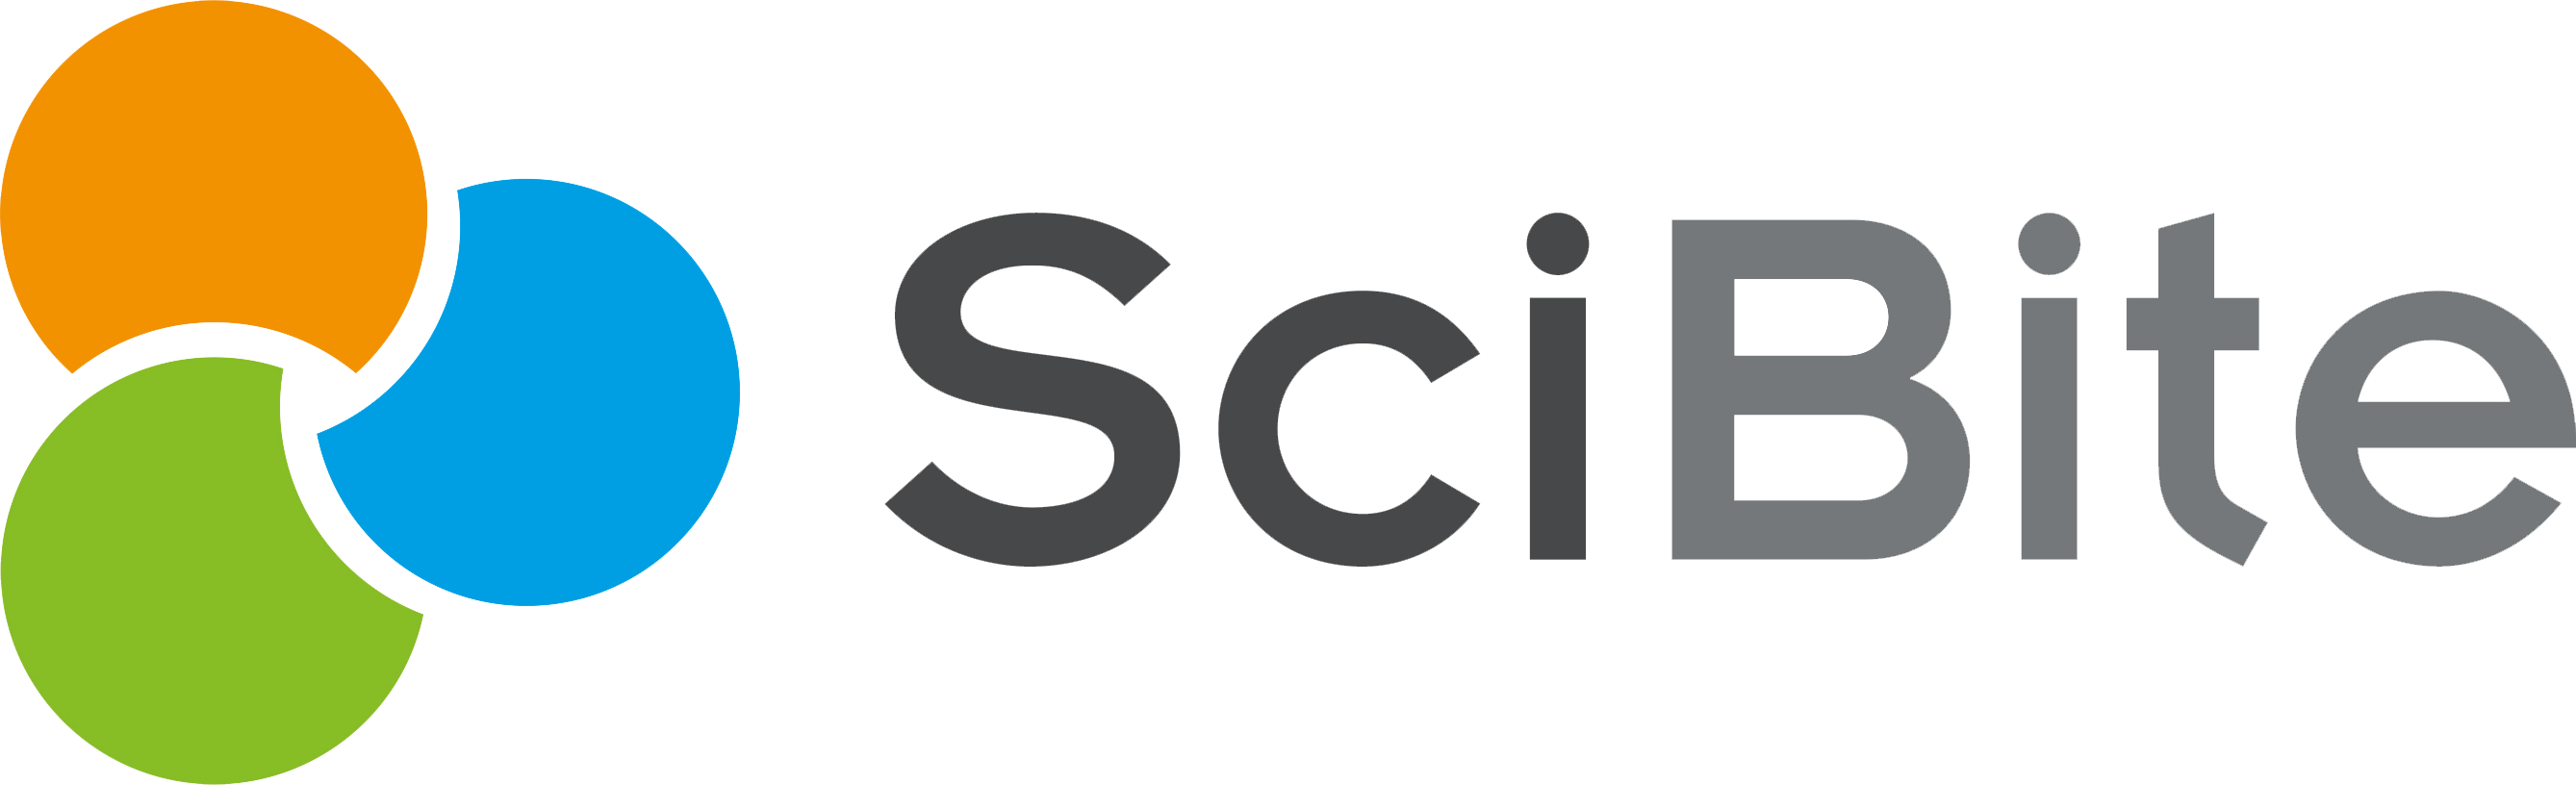 SciBite-logo-300dpi-cmyk_transparent